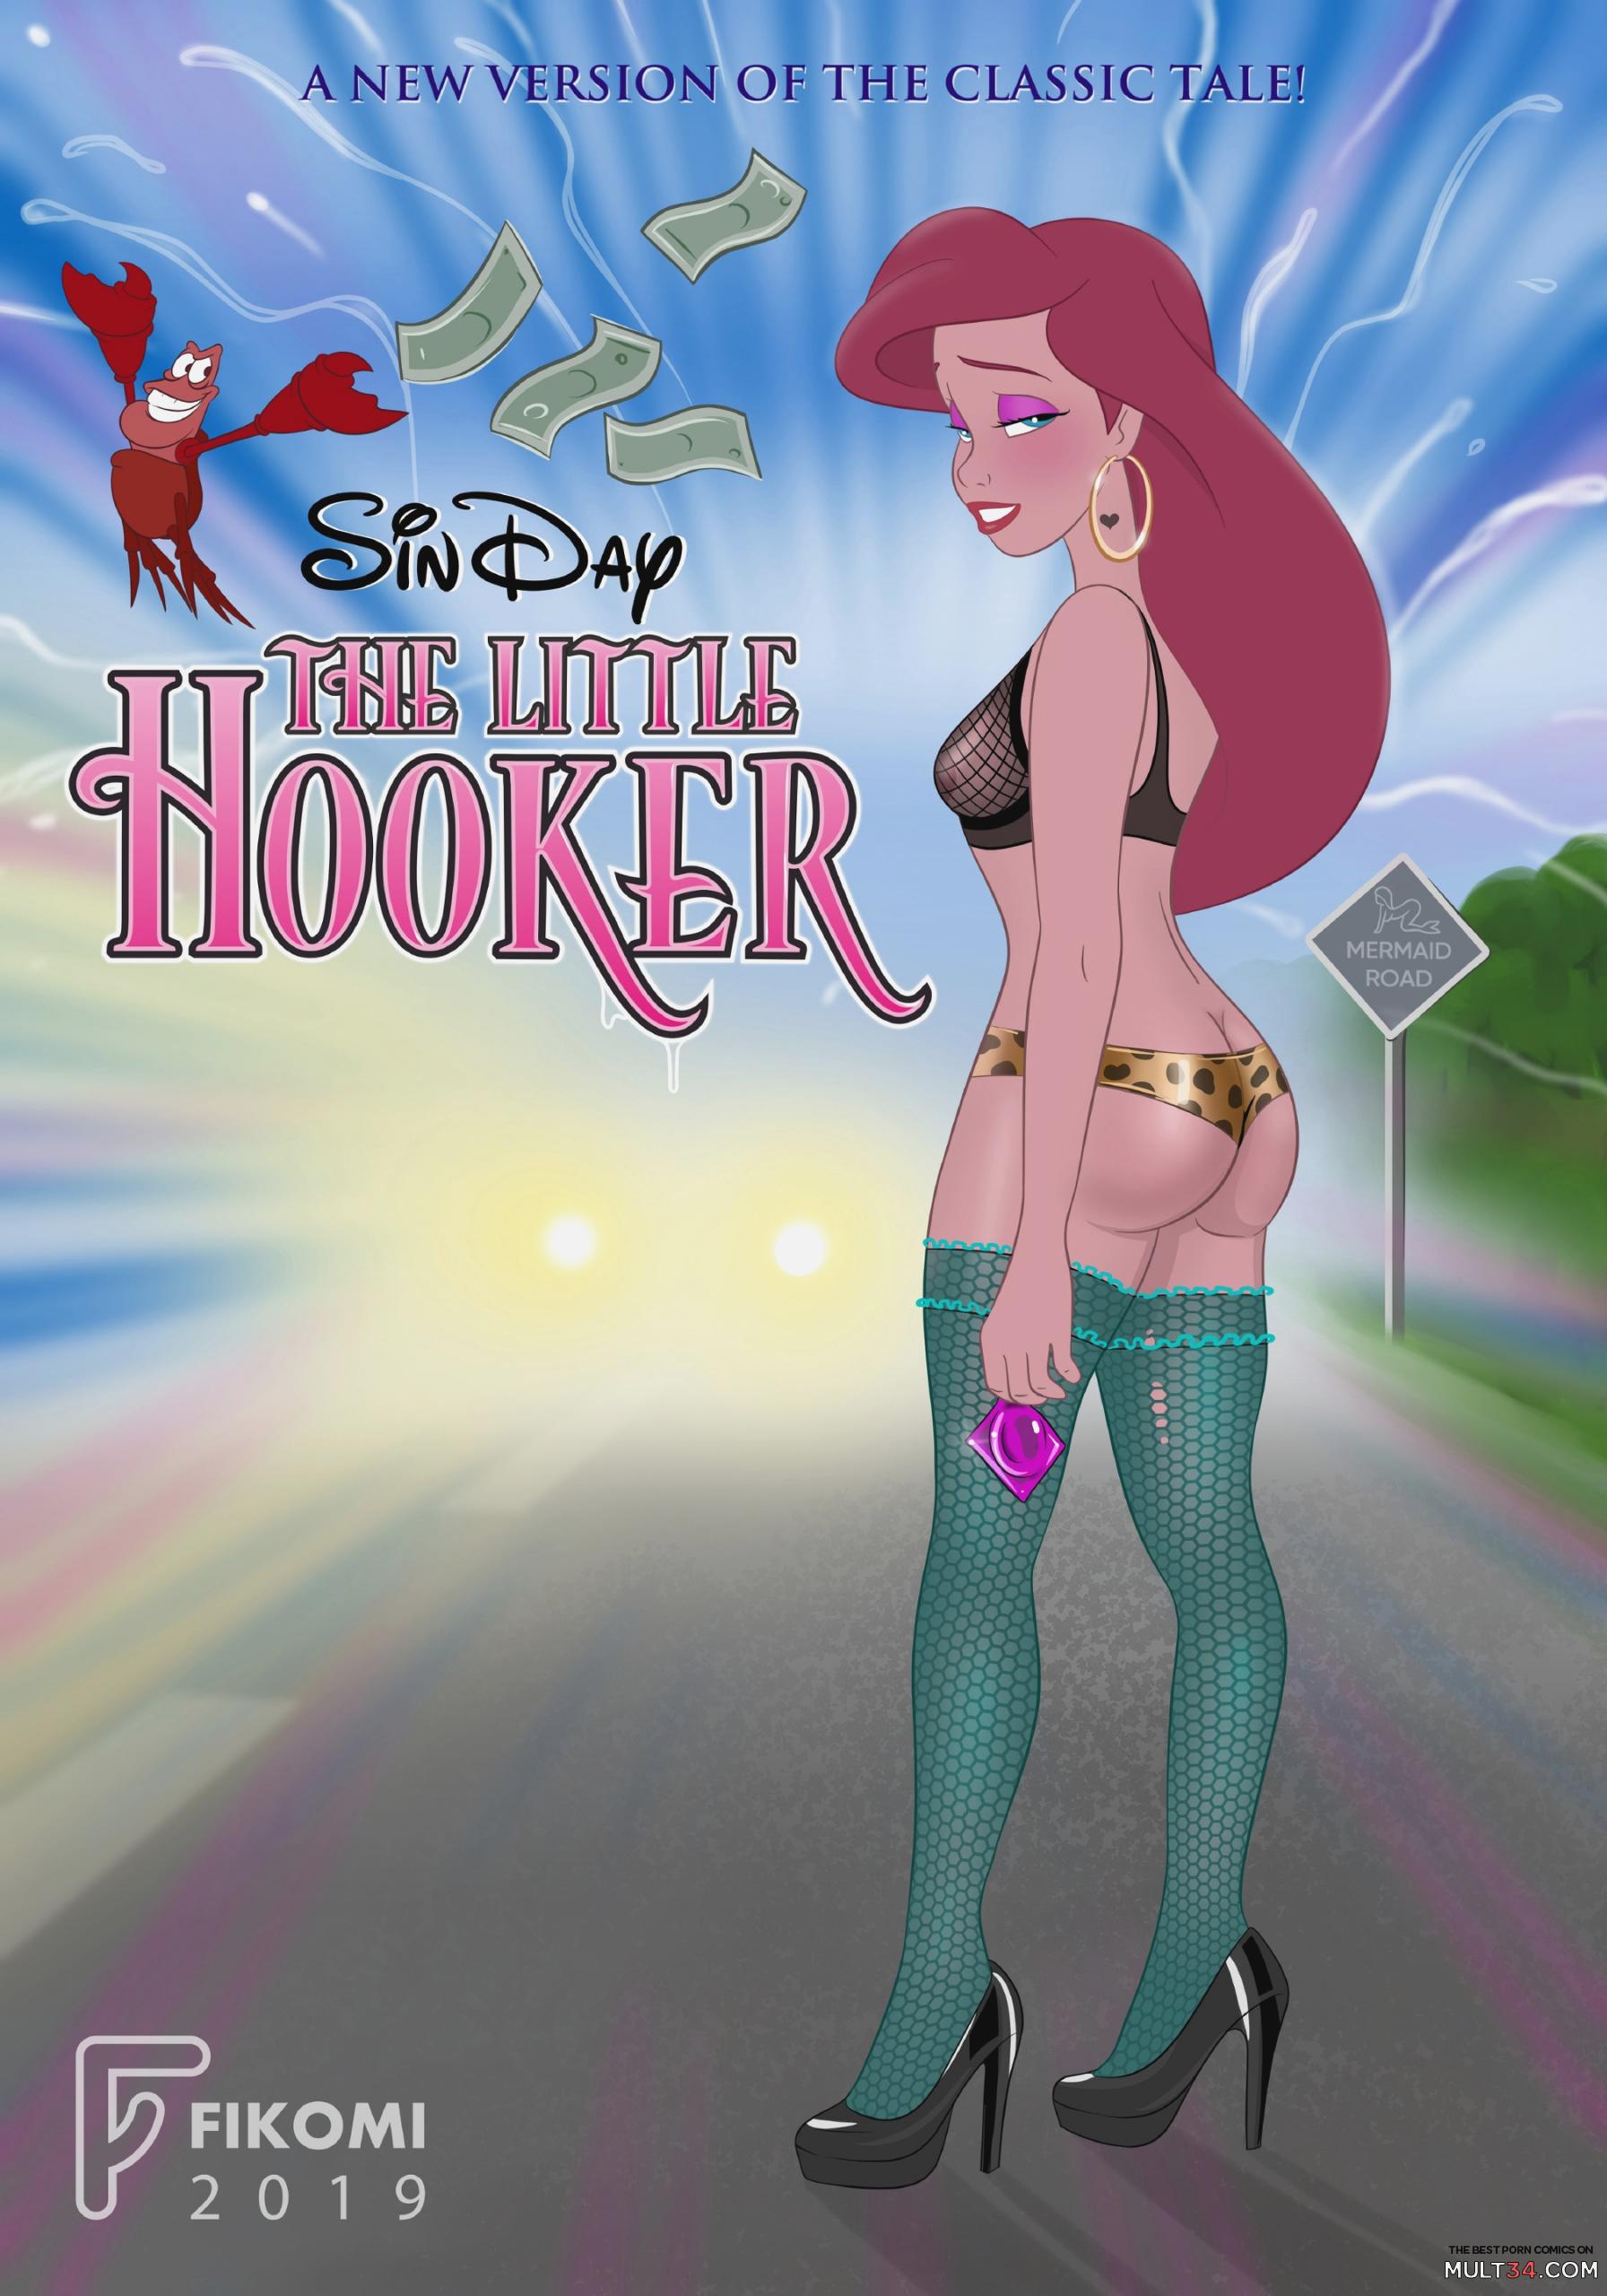 1792px x 2560px - The Little Hooker porn comic - the best cartoon porn comics, Rule 34 |  MULT34